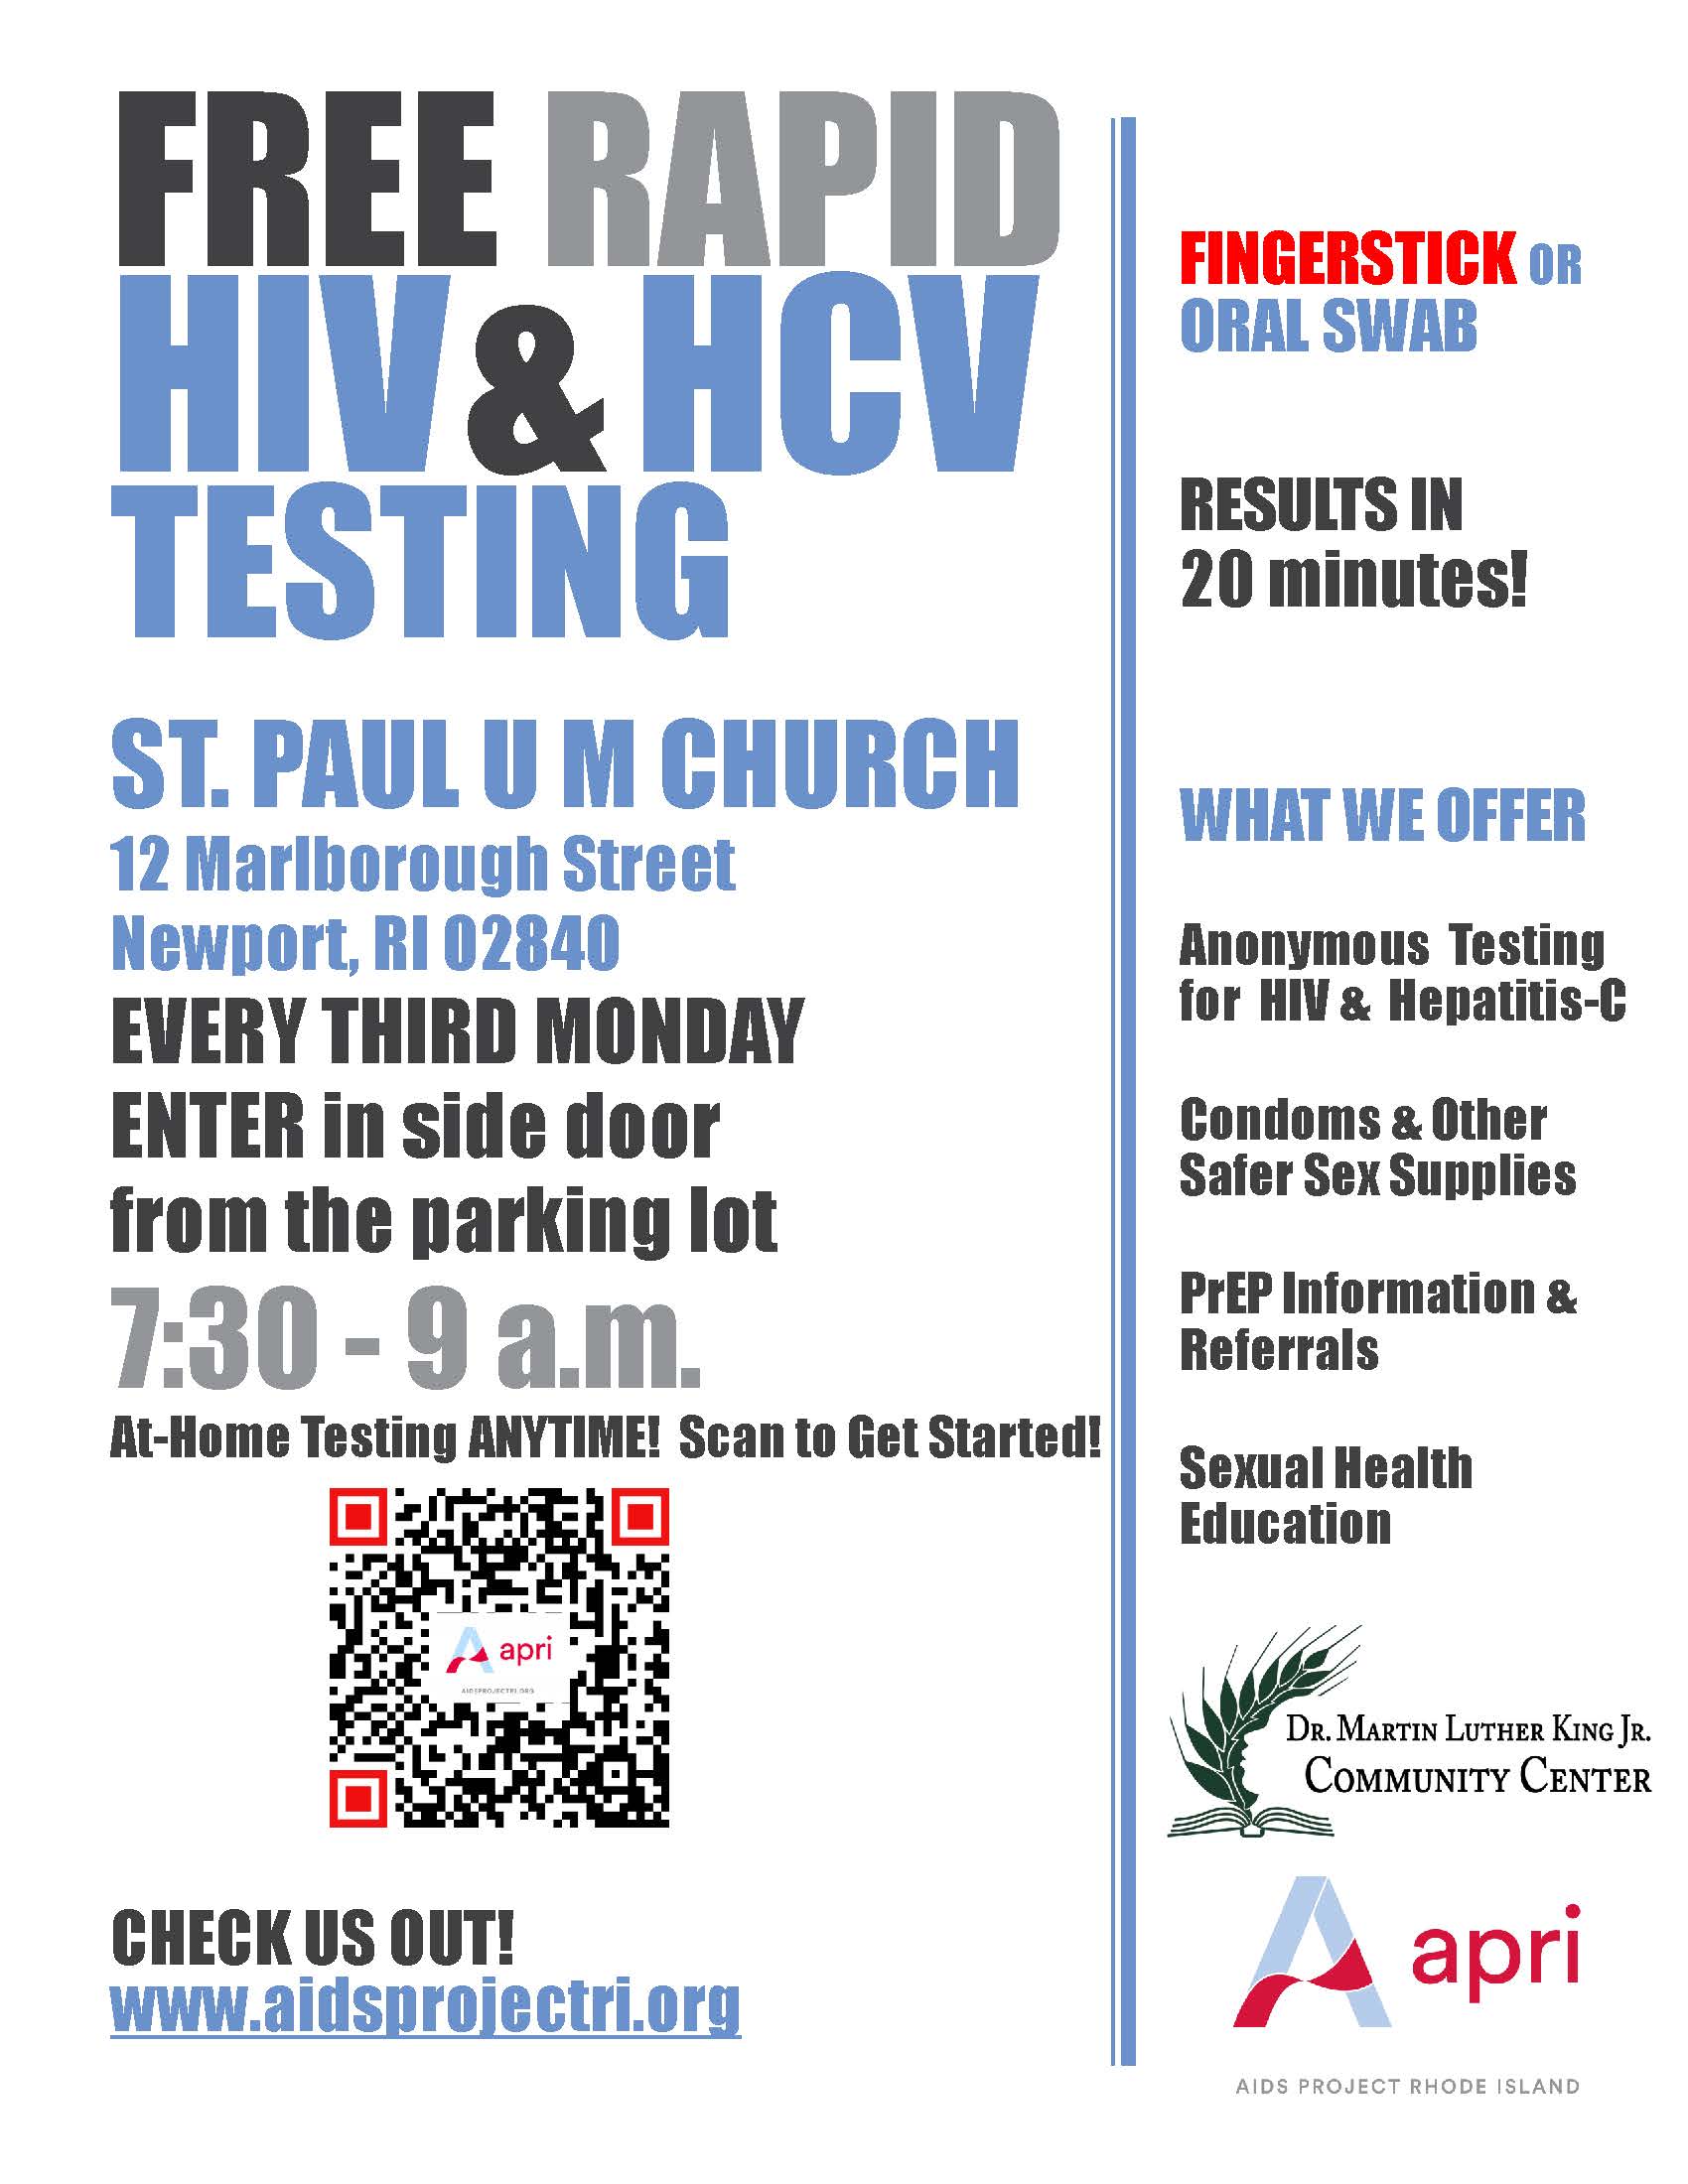 FREE HIV and HEP C testing